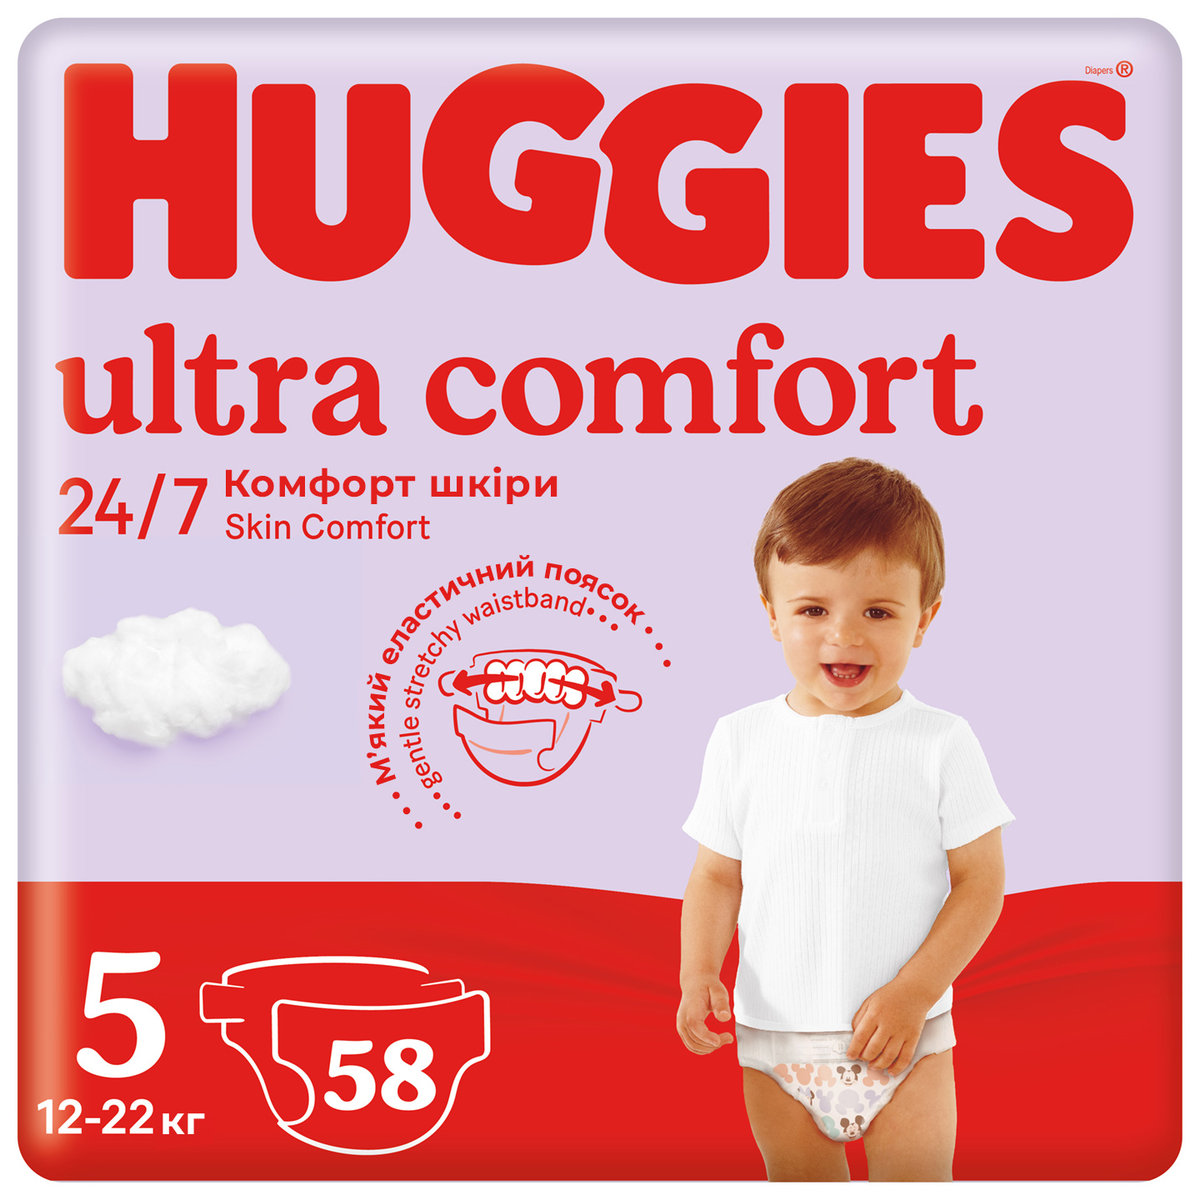 HUGGIES Elite Soft Pants size 4 (152 pcs) - Nappies